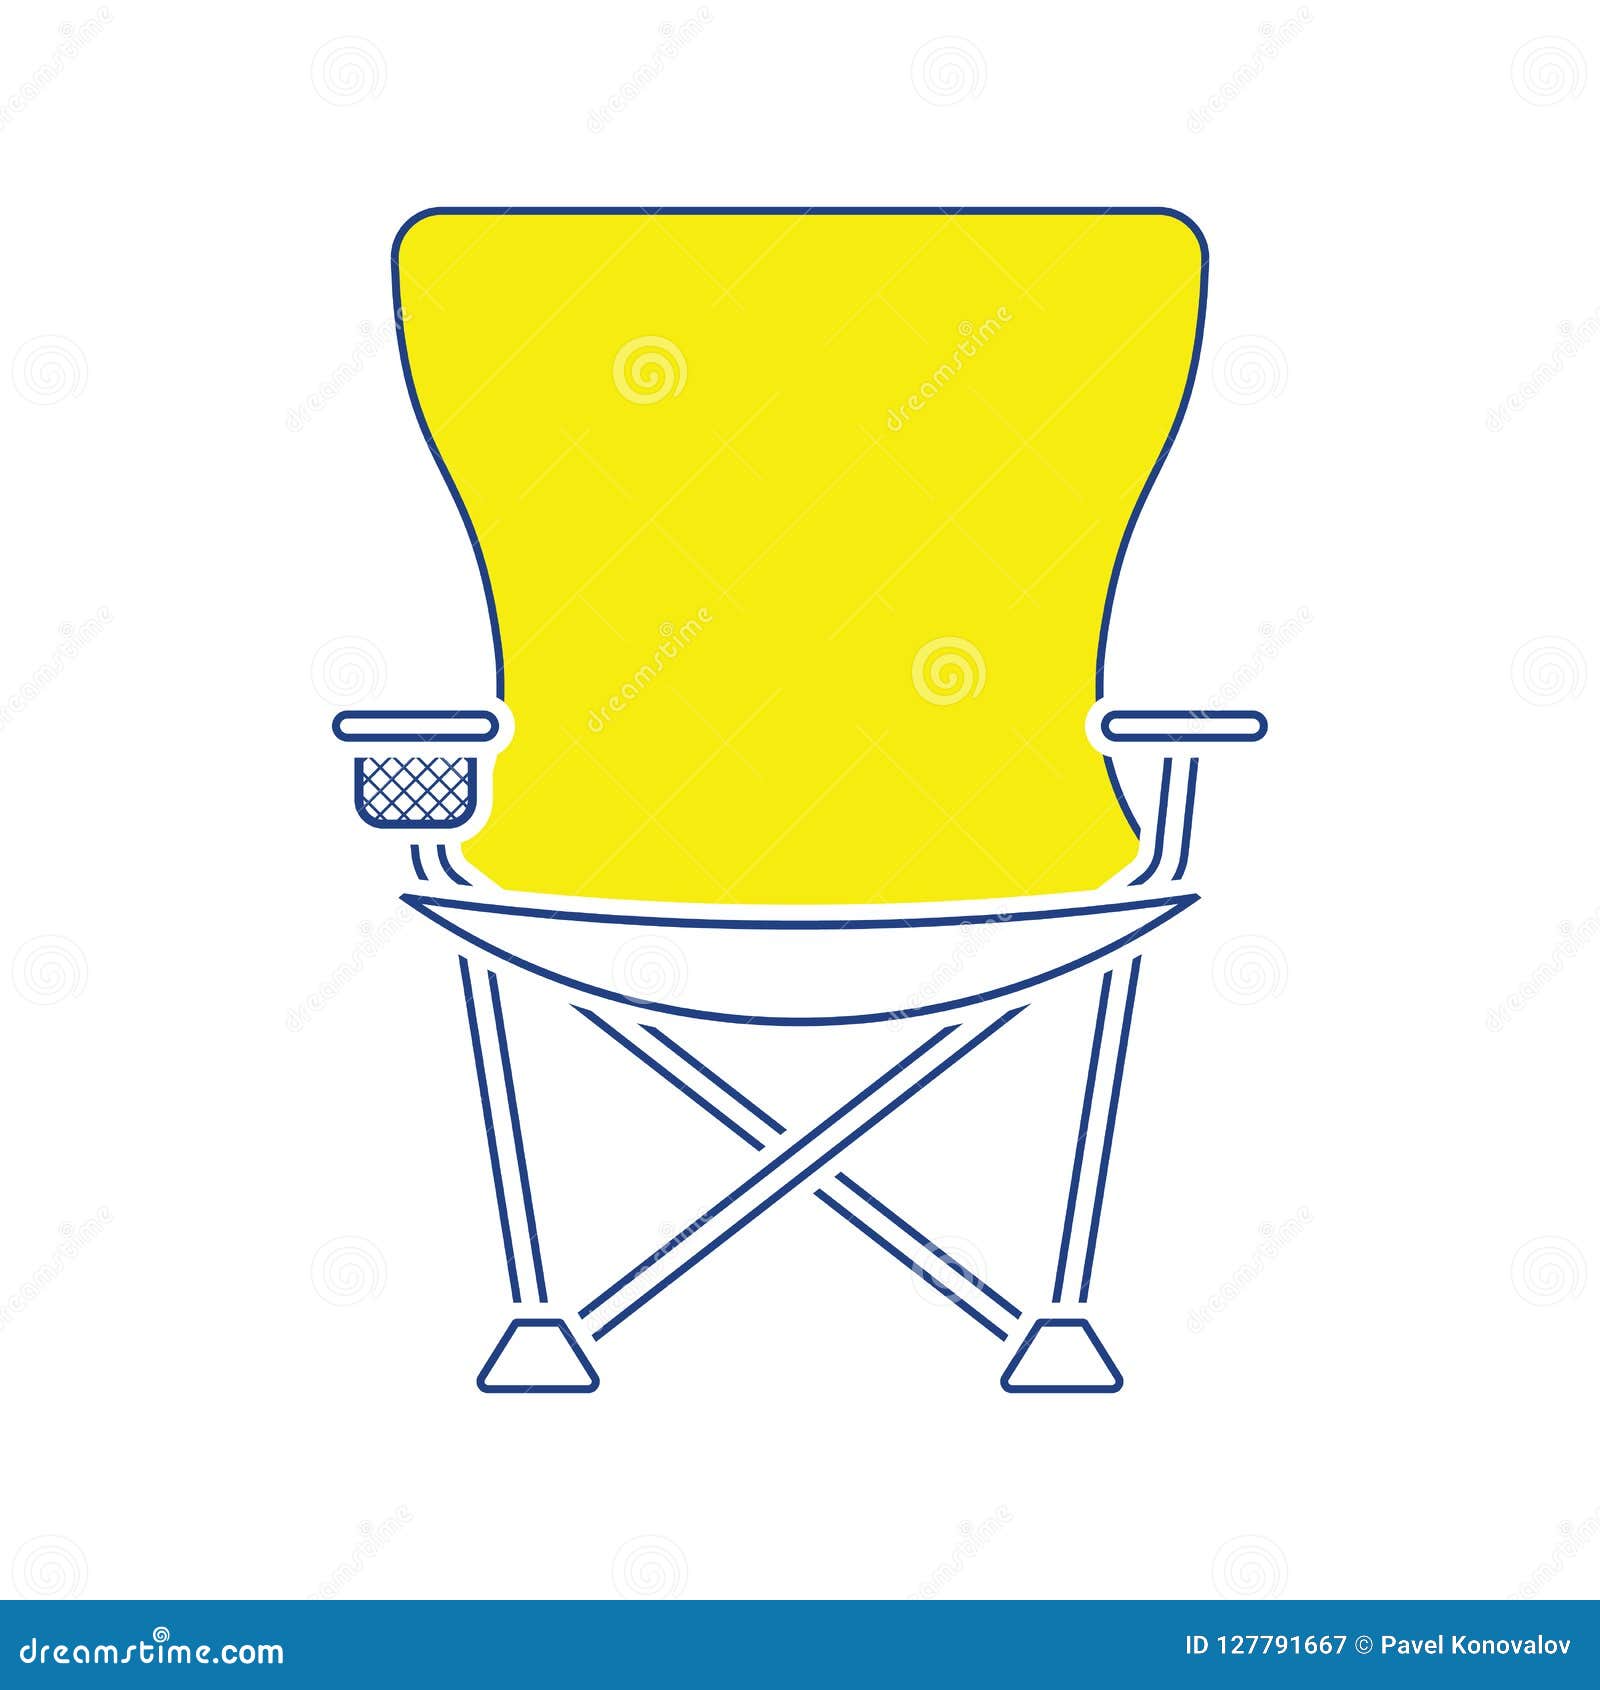 https://thumbs.dreamstime.com/z/icon-fishing-folding-chair-icon-fishing-folding-chair-thin-line-design-vector-illustration-127791667.jpg